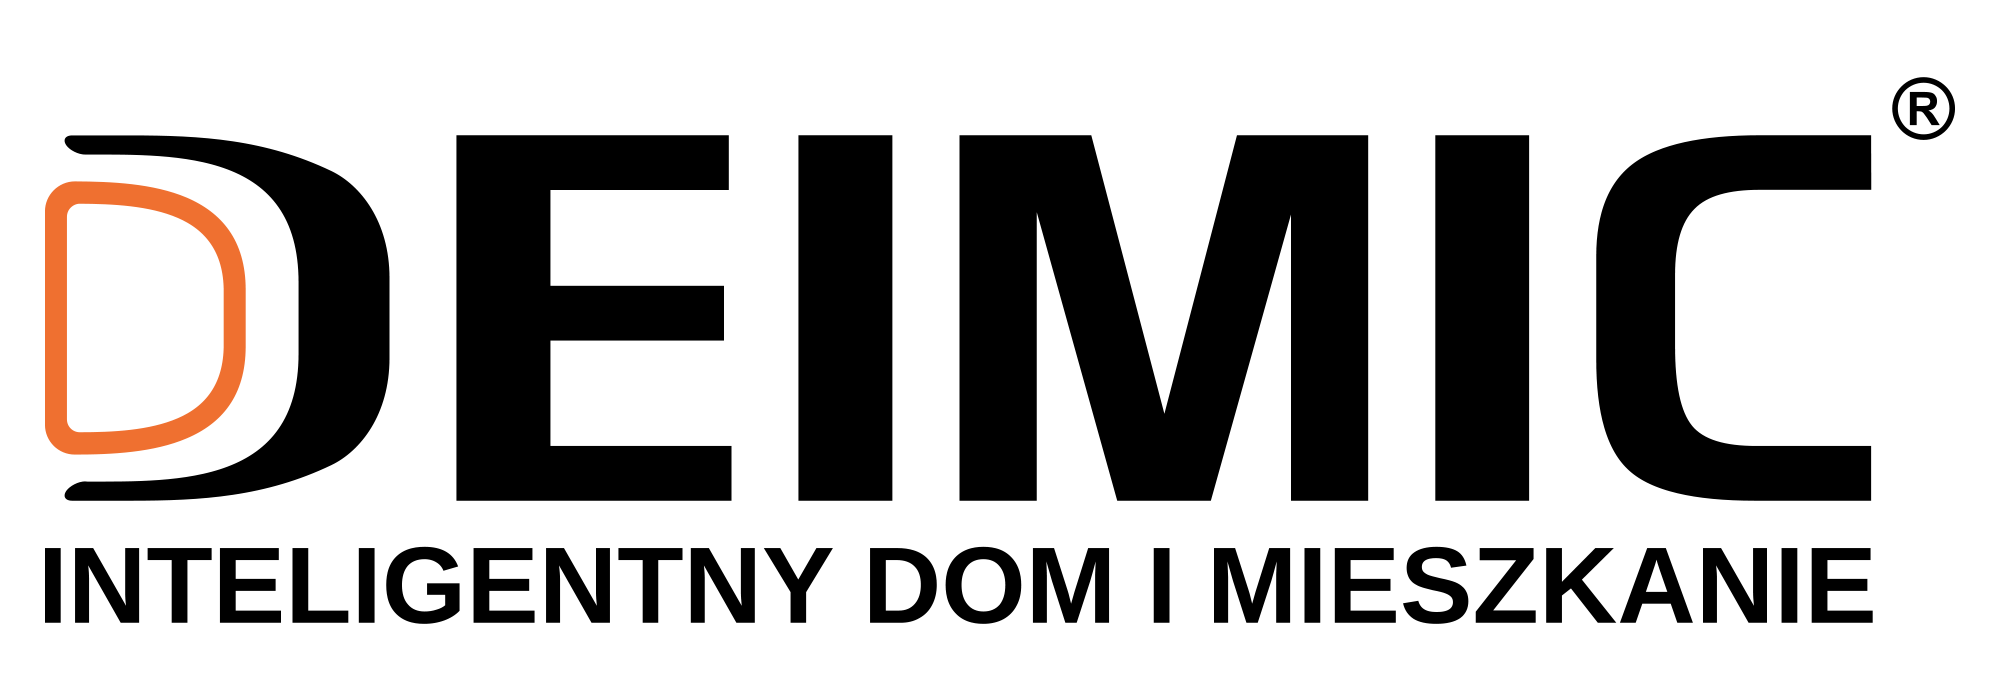 DEIMIC logo